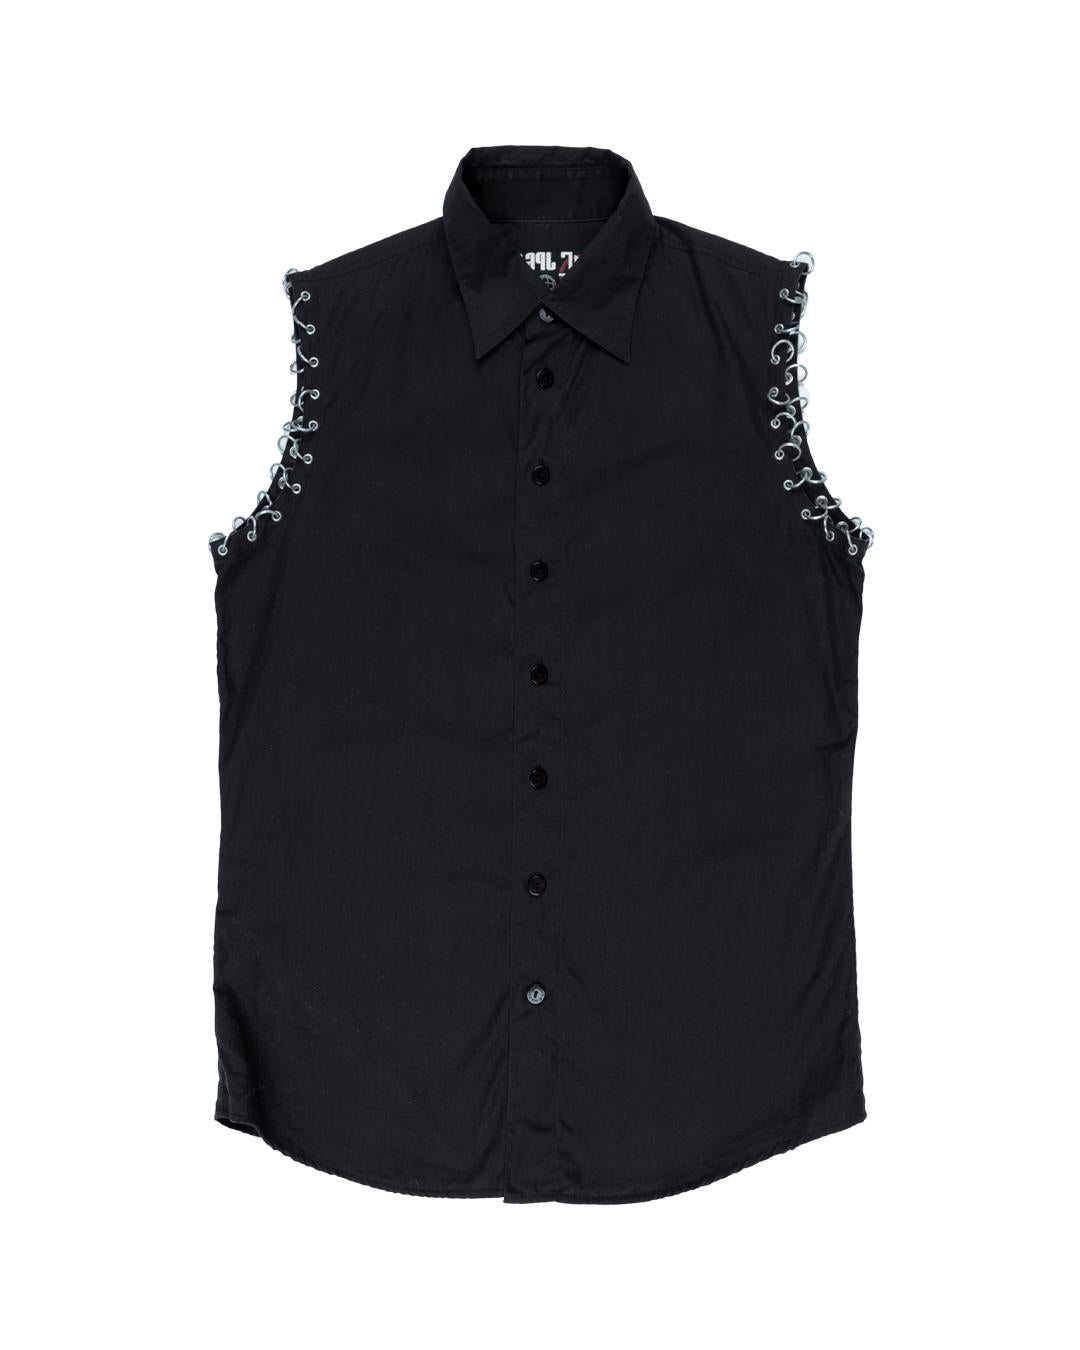 Jean Paul Gaultier Metal Pierced Sleeveless Shirt For Sale 1